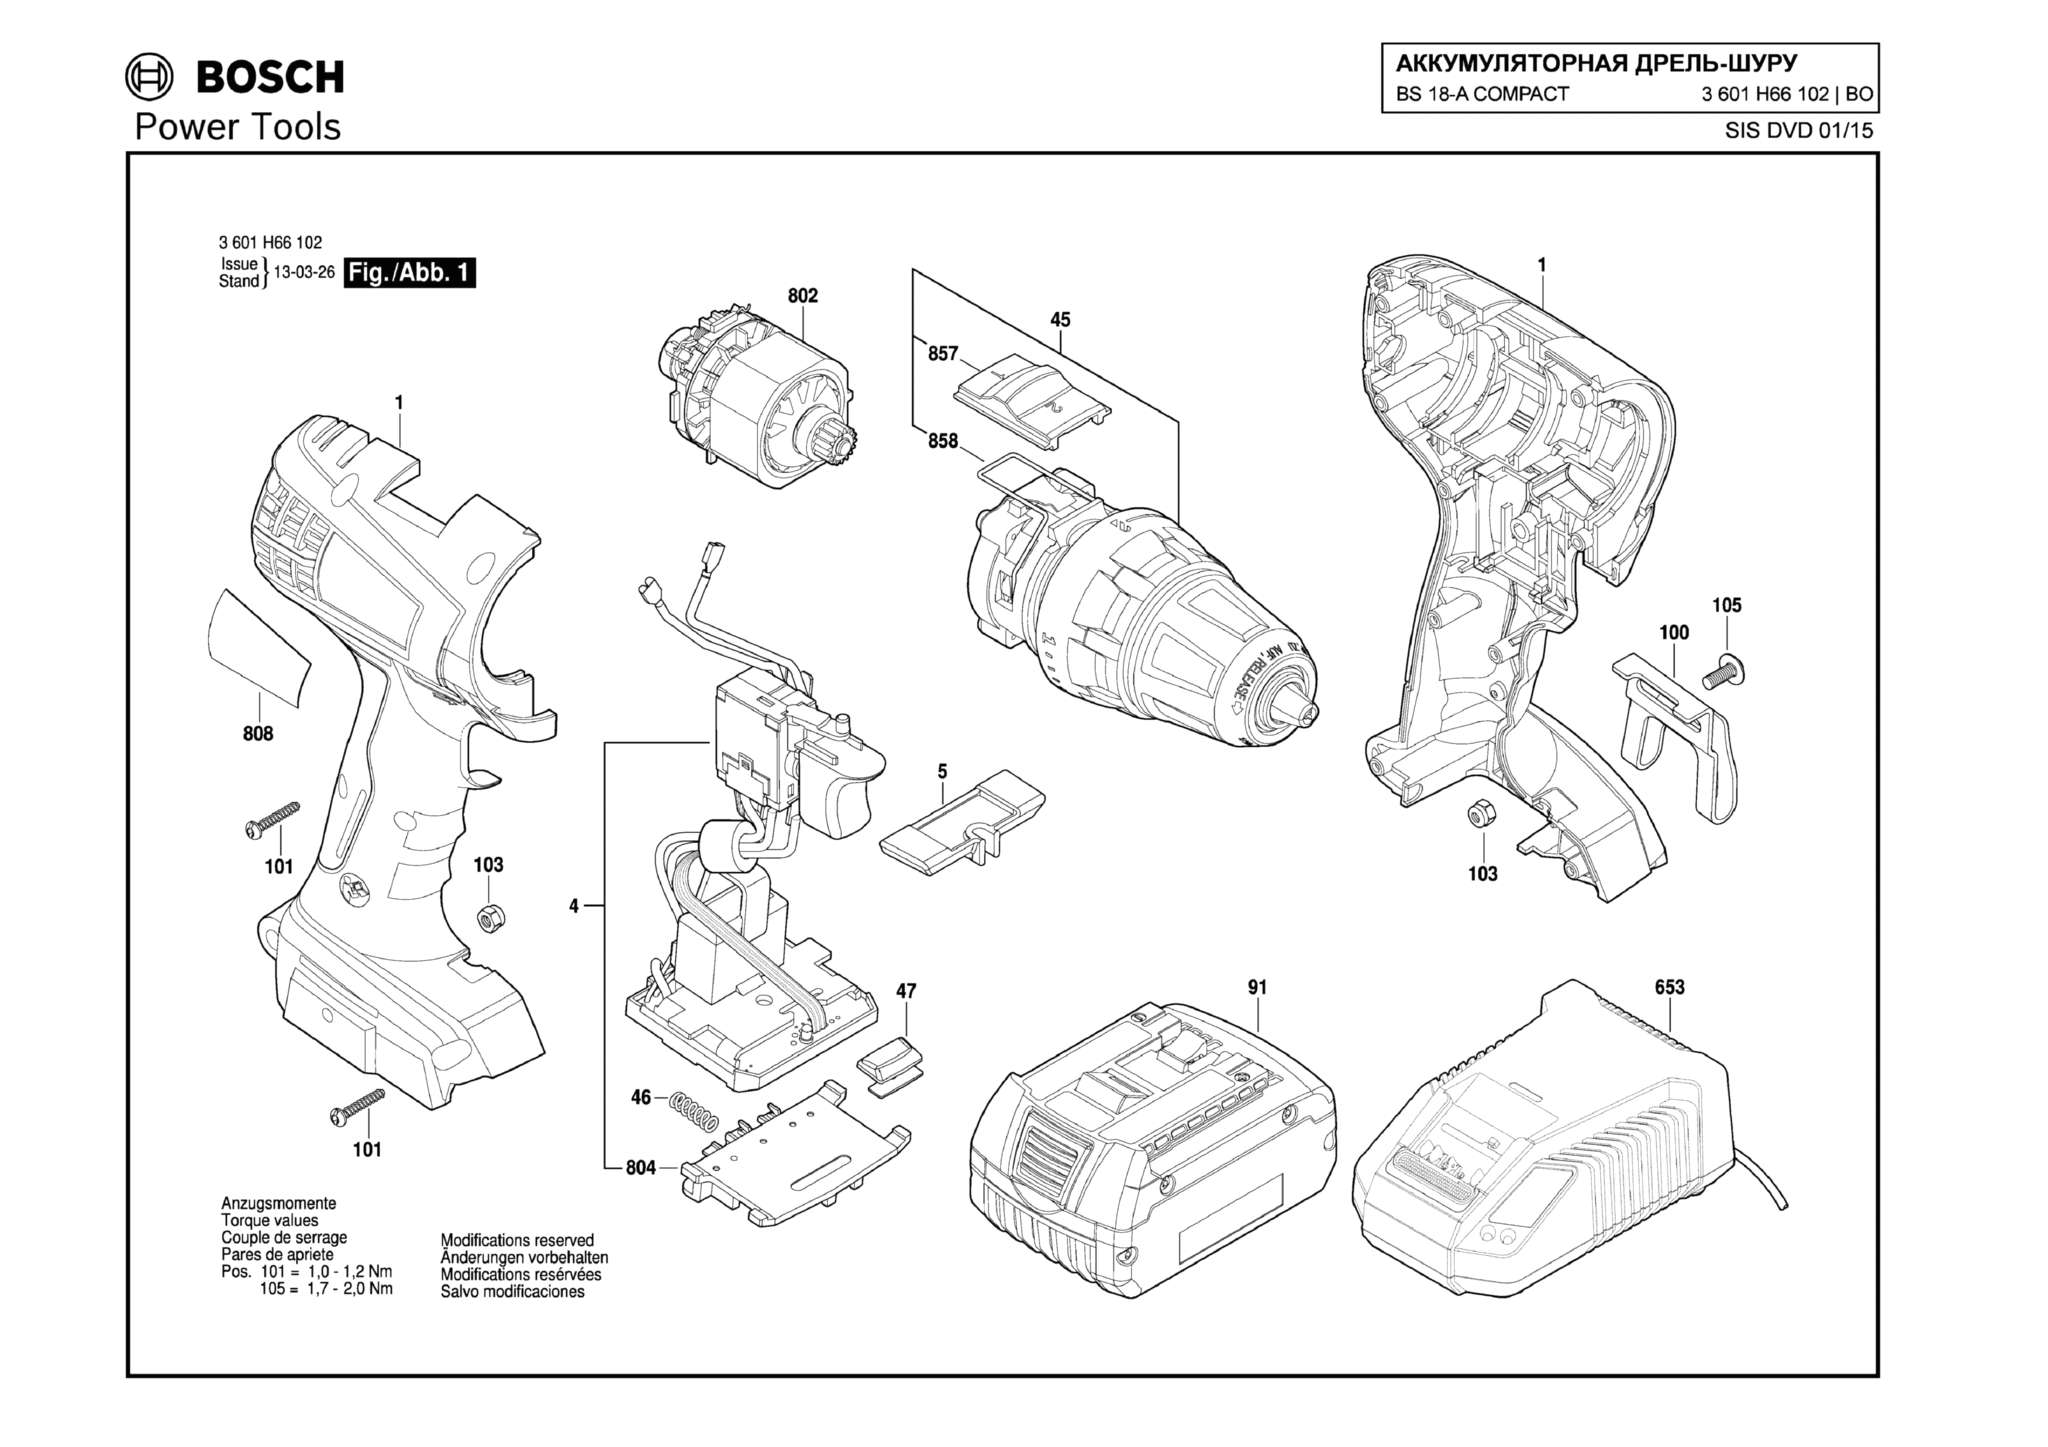 Запчасти, схема и деталировка Bosch BS 18-A COMPACT (ТИП 3601H66102)